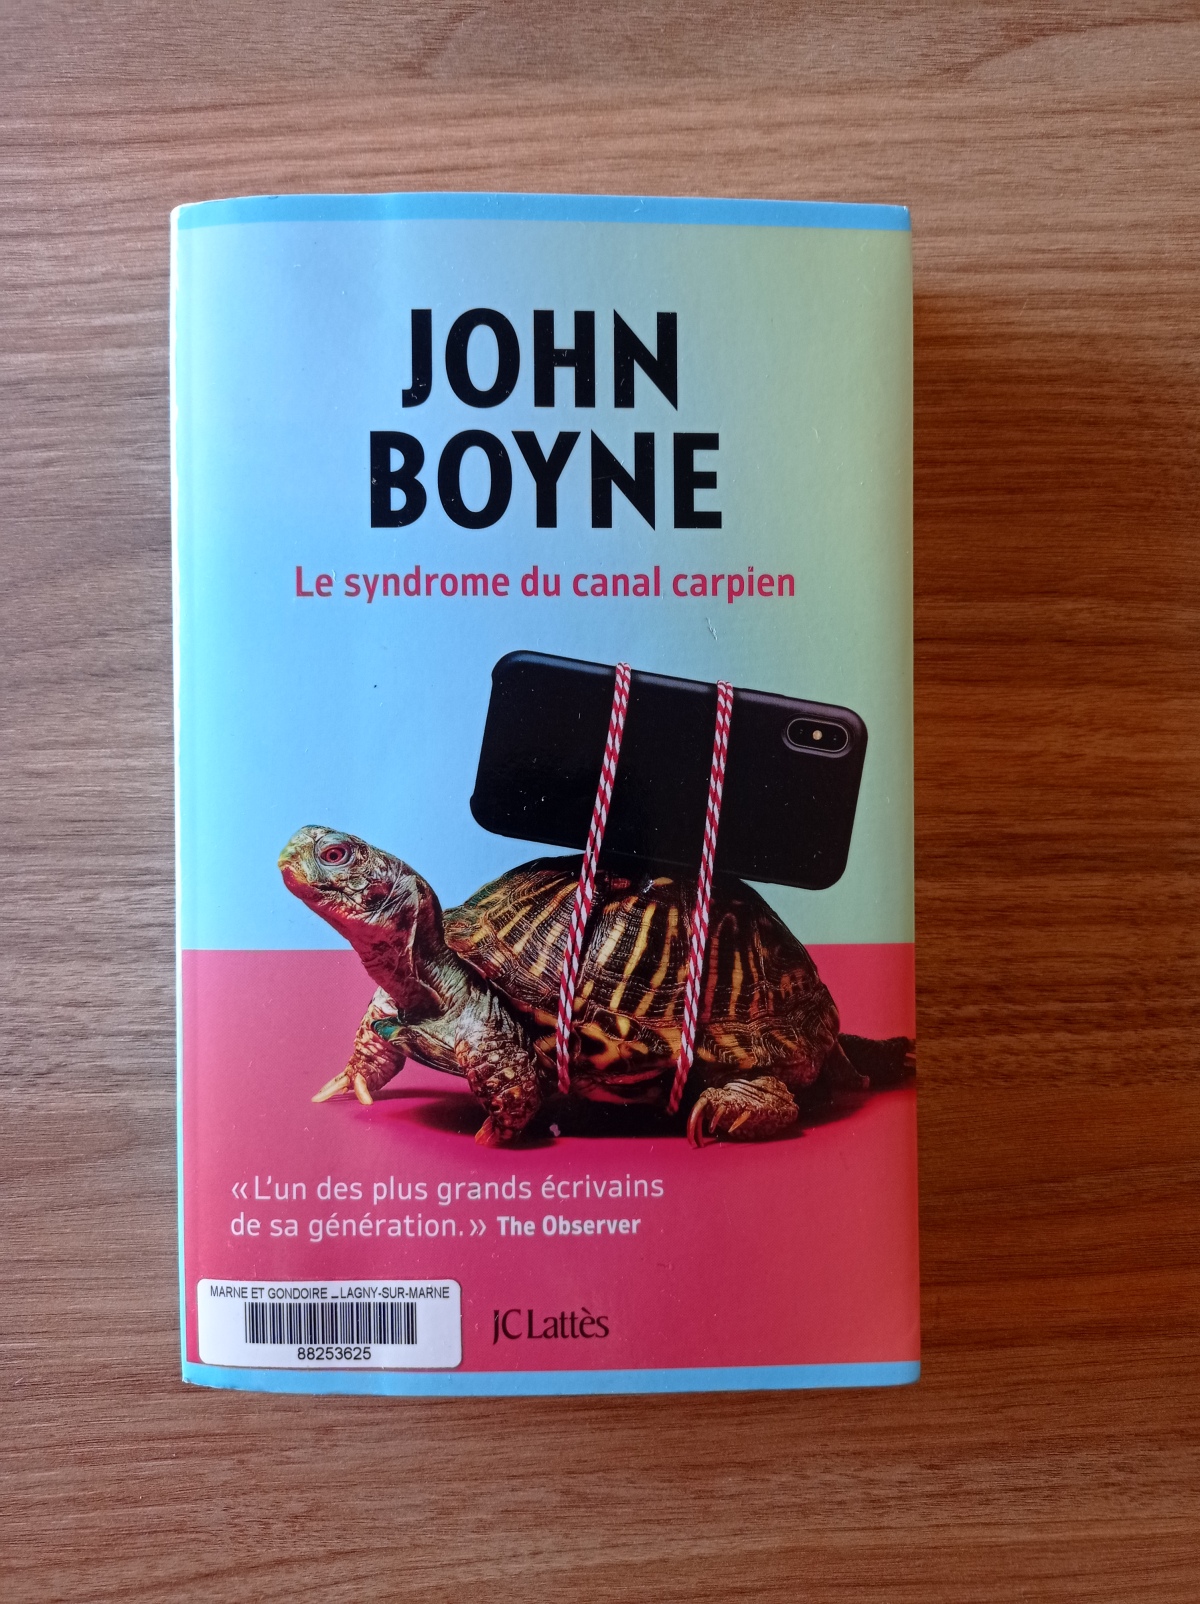 Le Syndrome du canal carpien / John Boyne